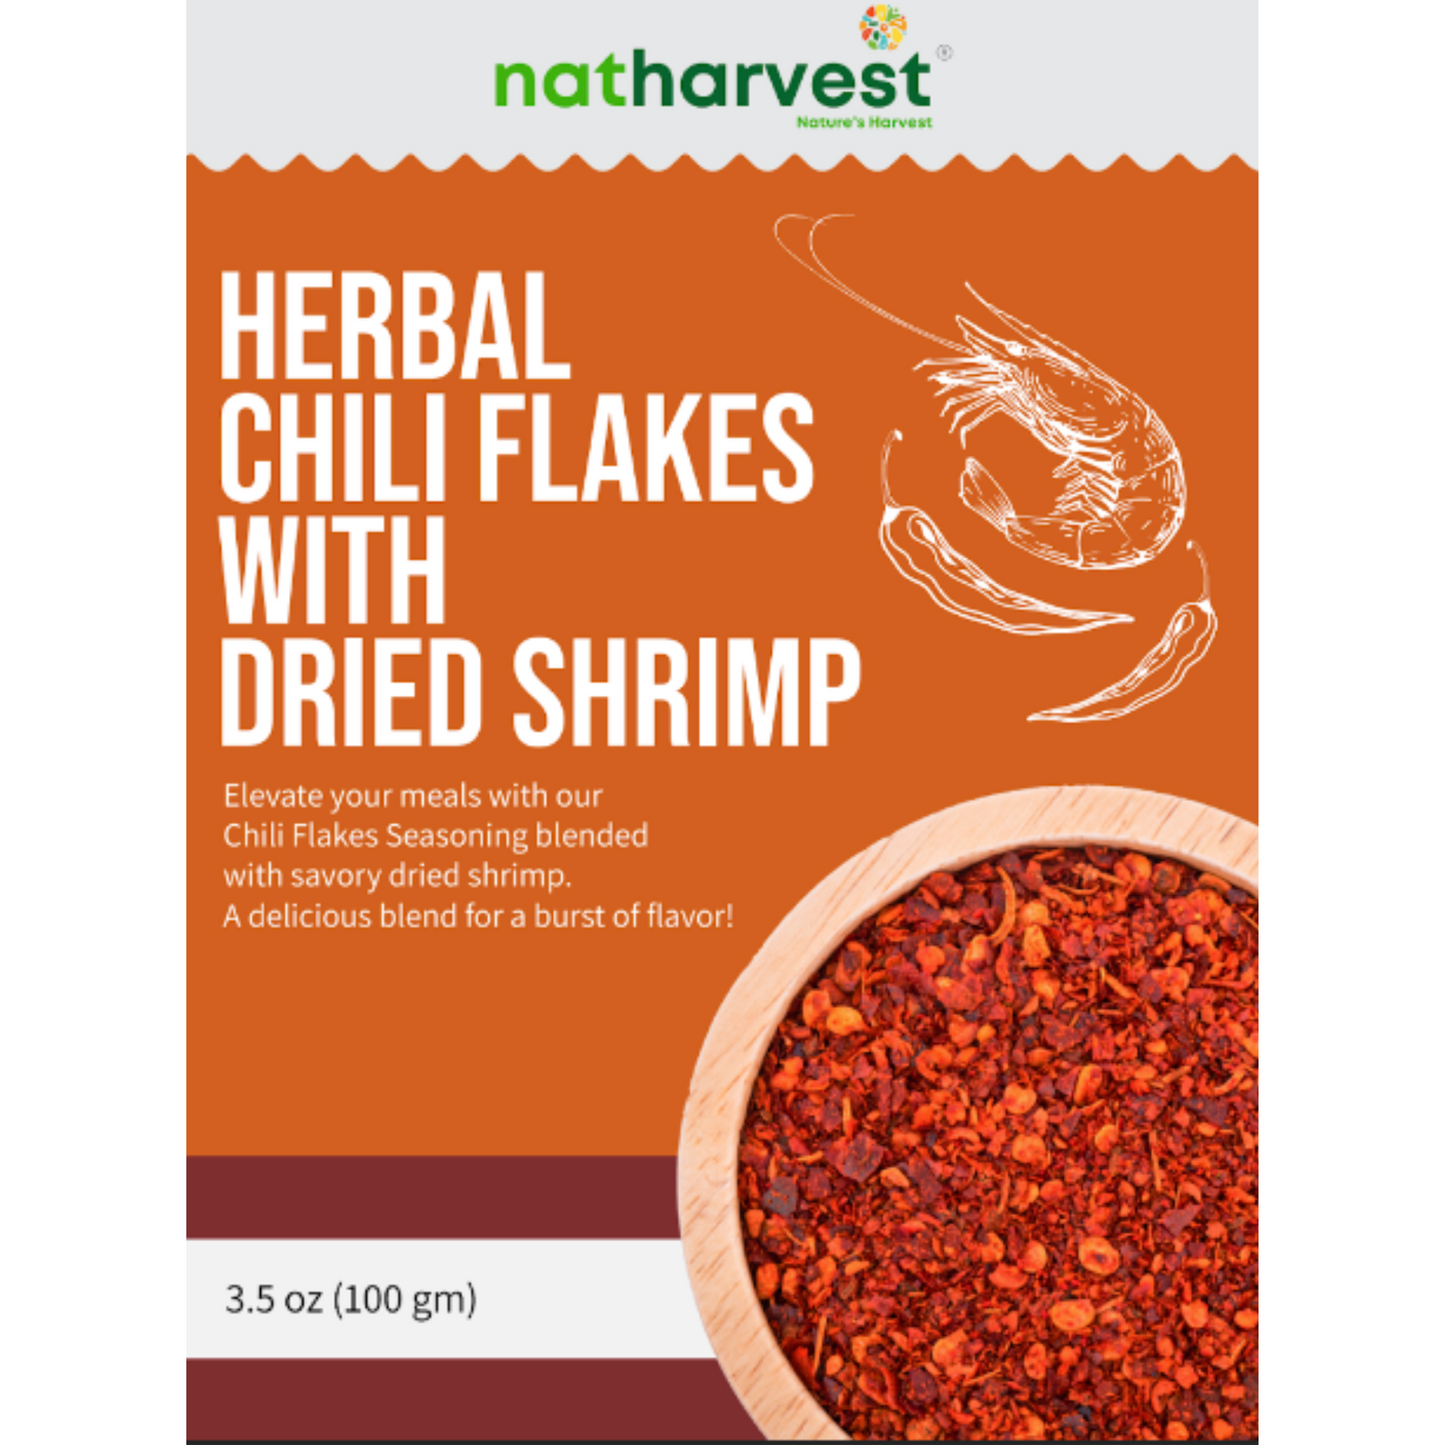 Natharvest Herbal Chili Flakes with Shrimp, medium-level spicy, 3.5 oz (100 gm)